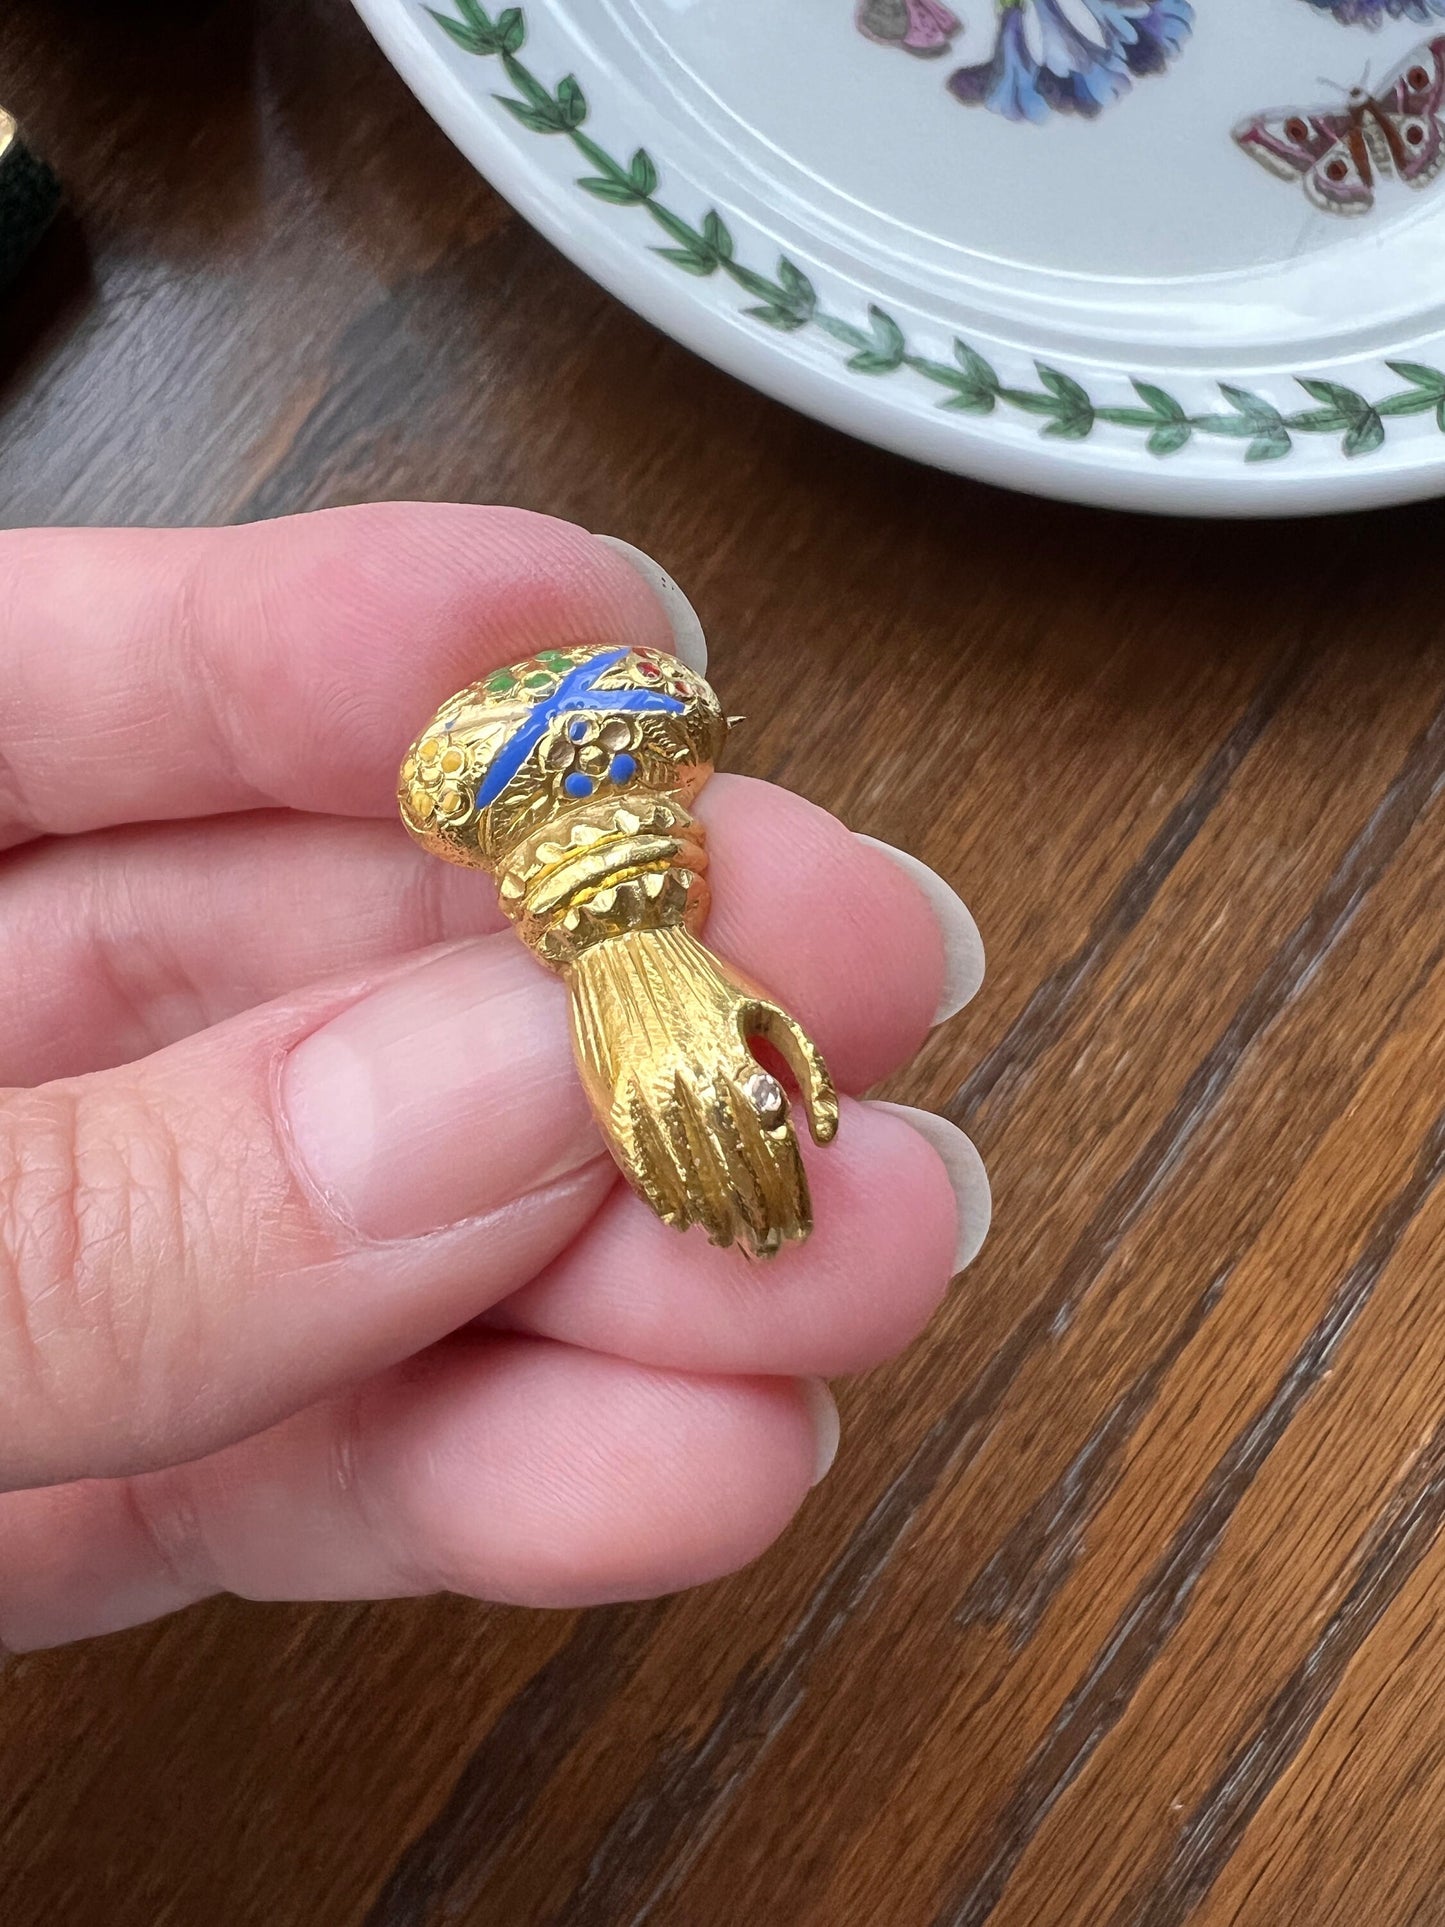 Heavy HAND Victorian Pin PENDANT 6g 14k Gold Blue Enamel Pocket Watch Pendant Holder Hook Figural Floral Cuff Romantic Gift w/ Diamond Ring